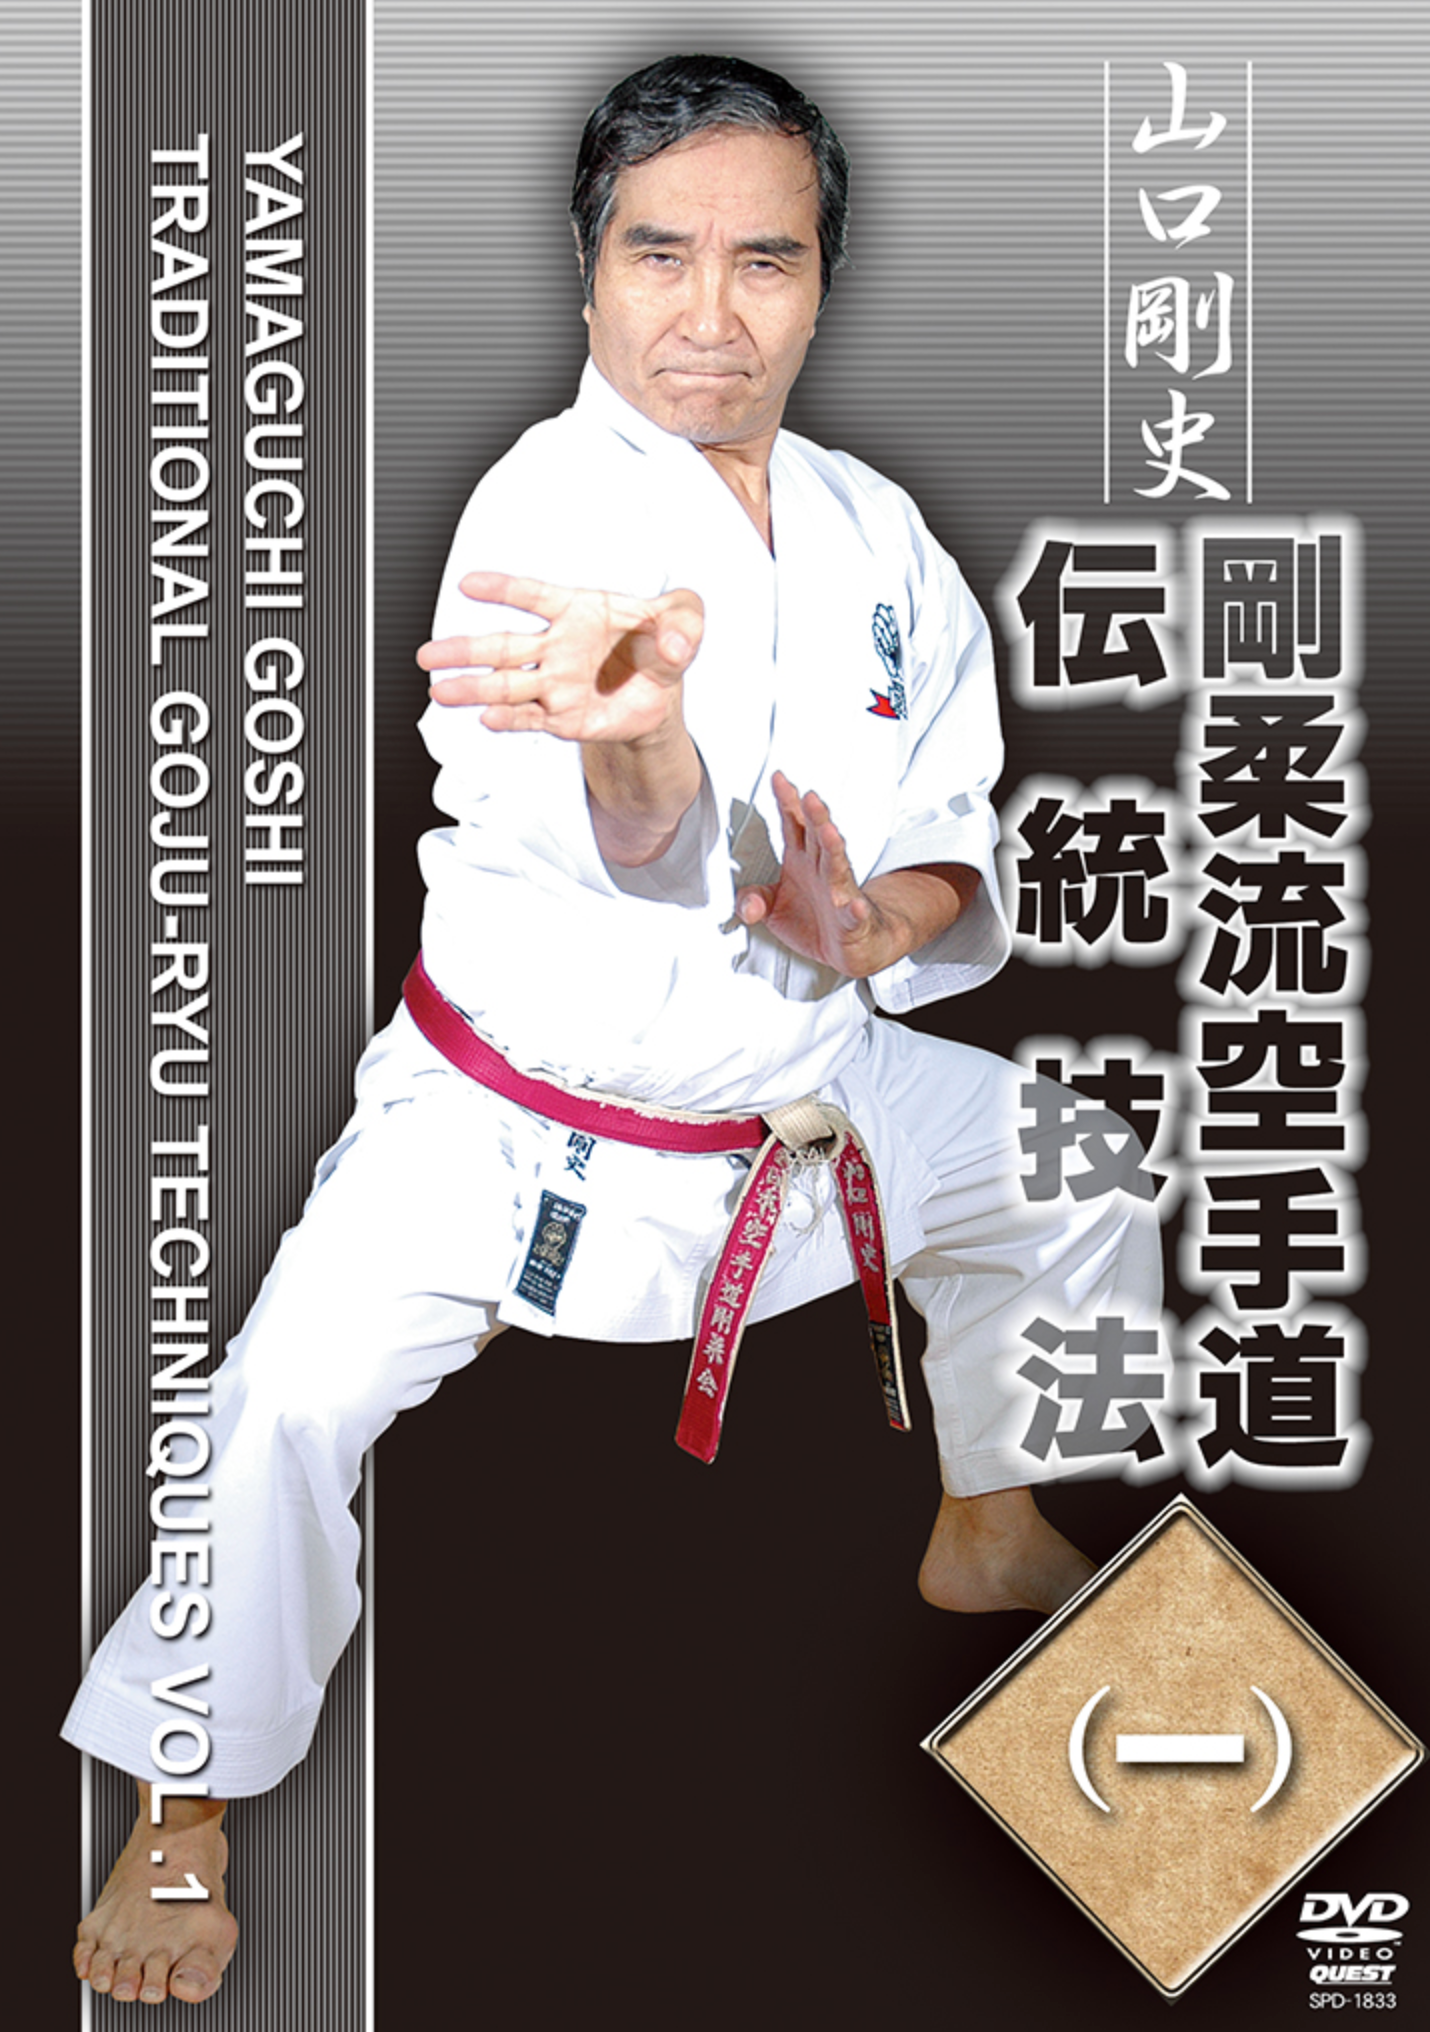 Traditional Goju Ryu Techniques DVD 1 by Goshi Yamaguchi - Budovideos Inc